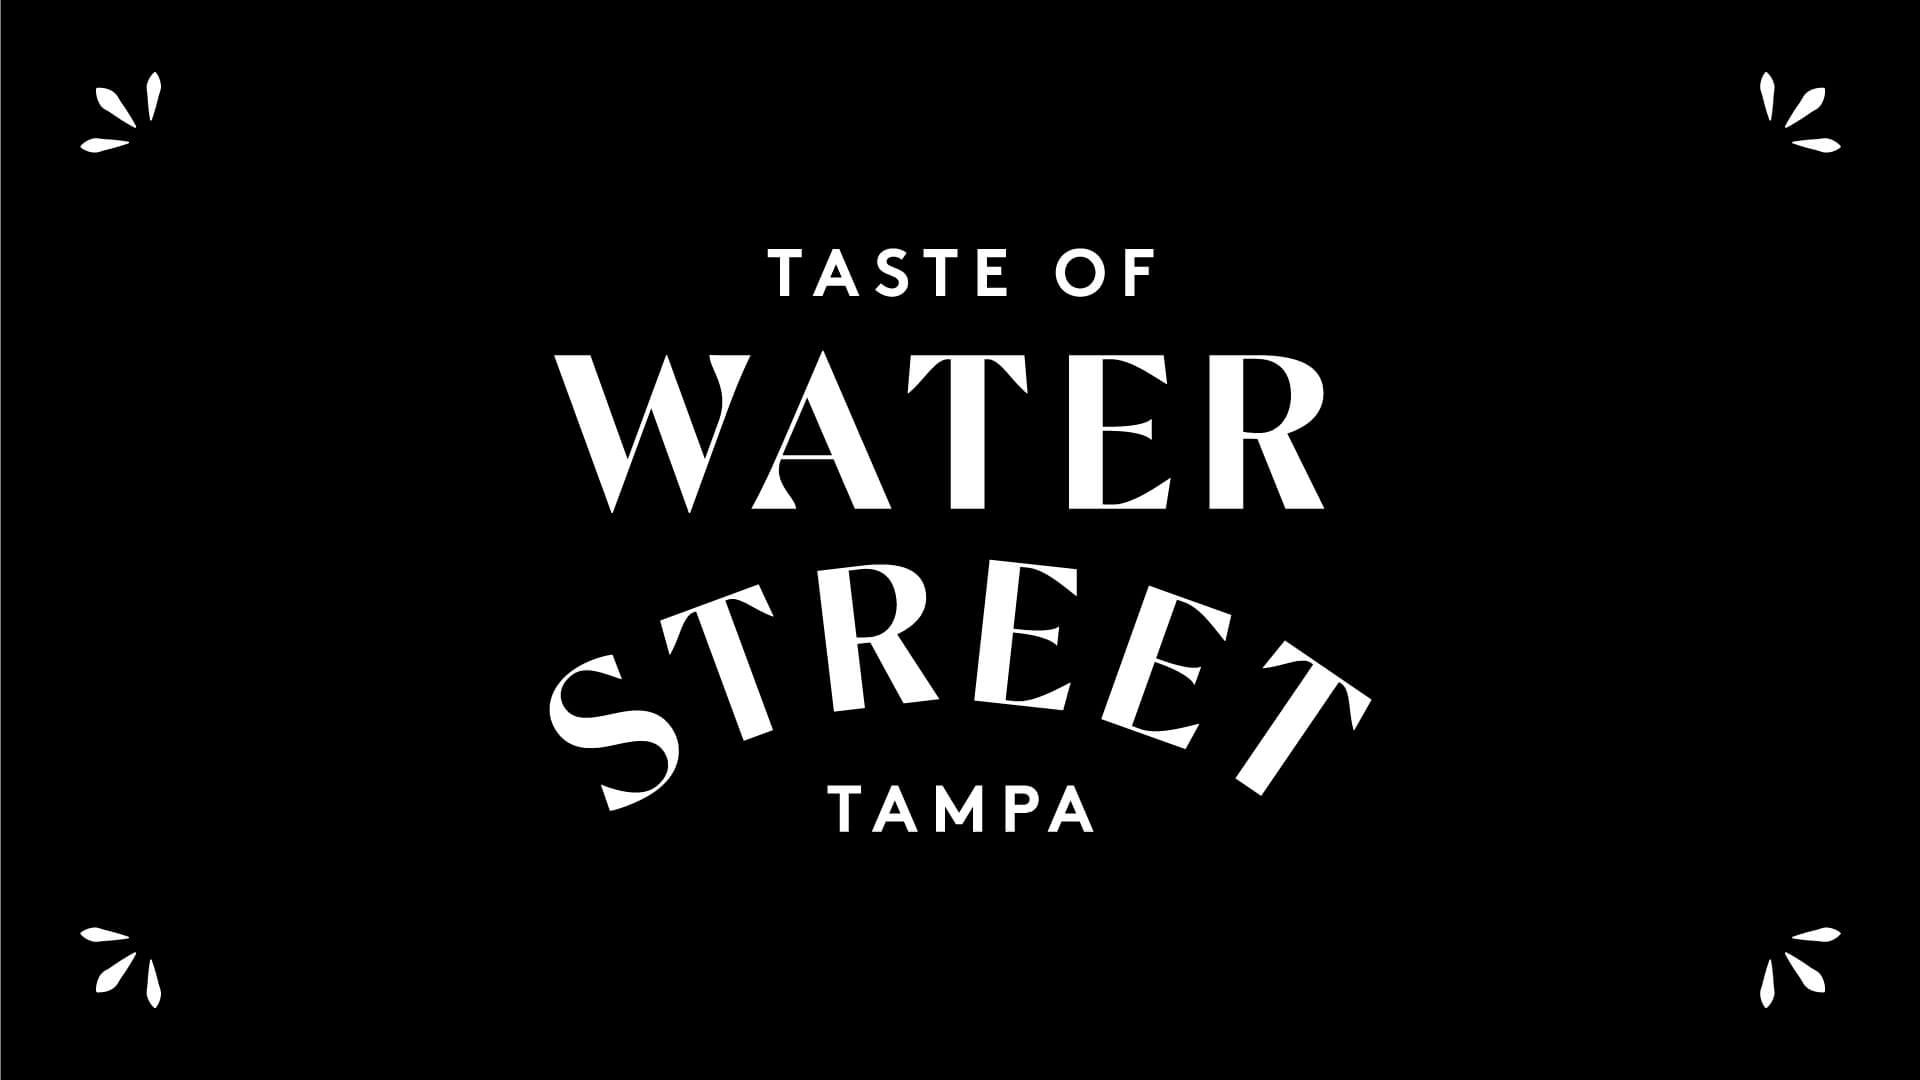 Taste of Water Street Tampa graphic